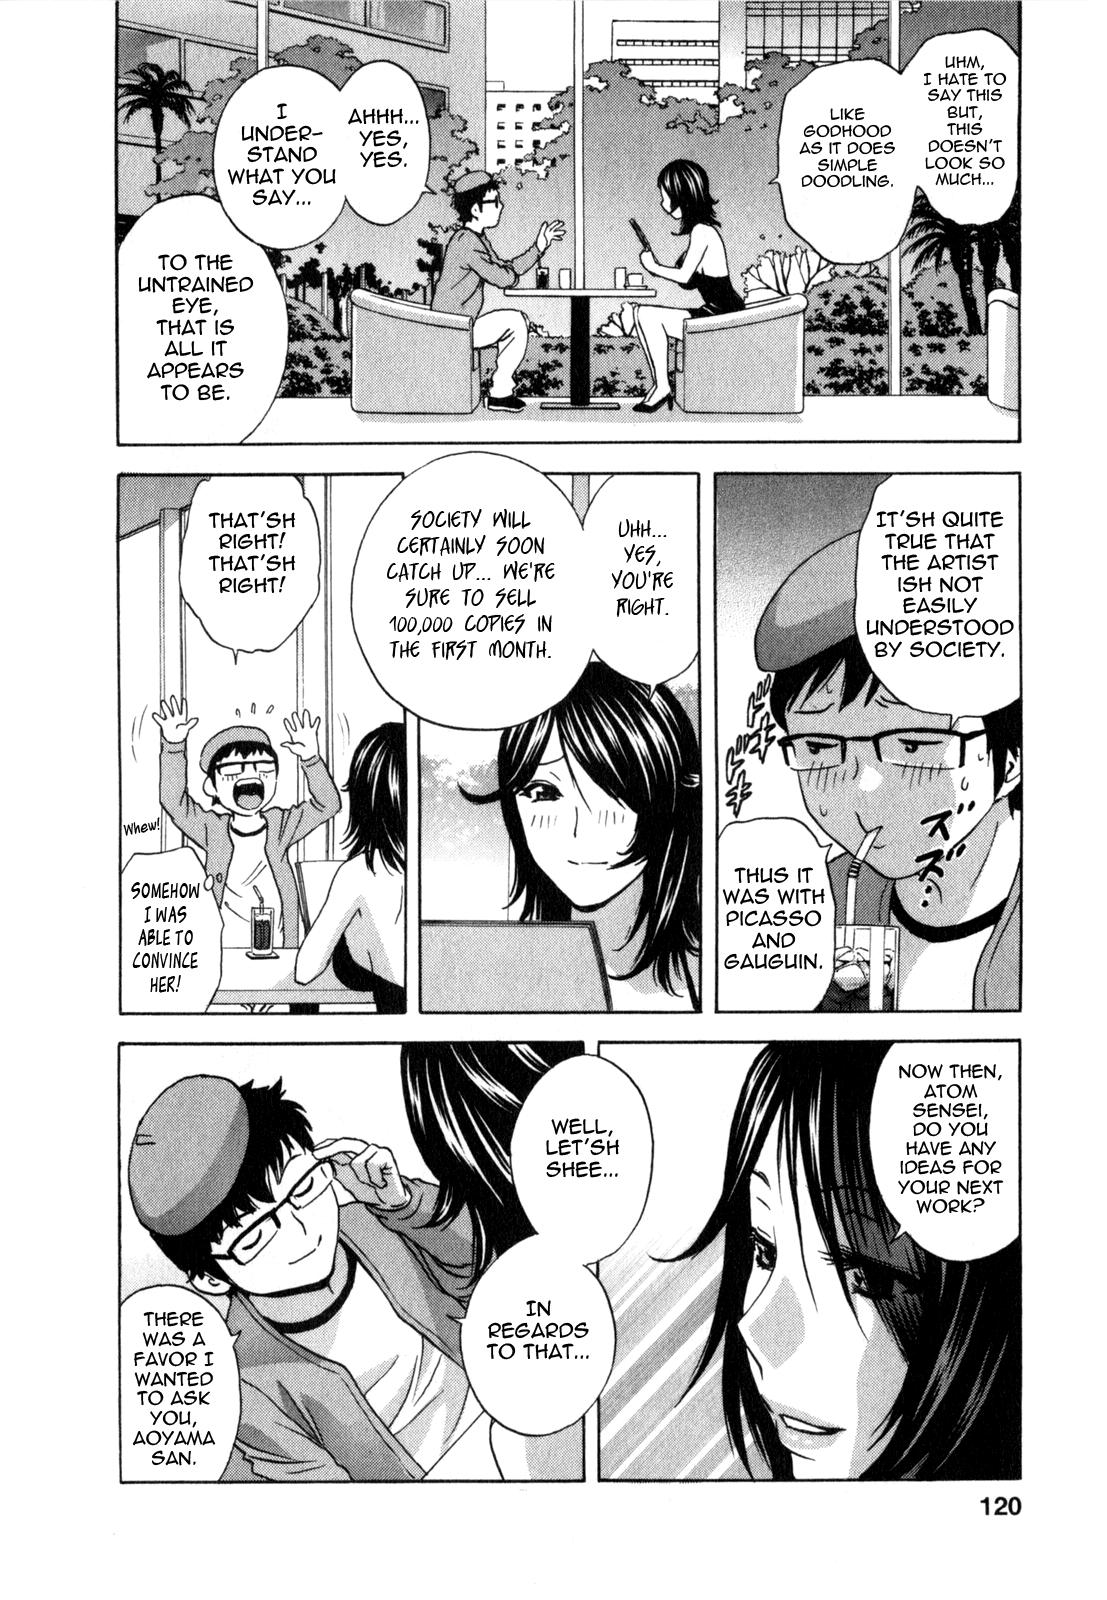 [Hidemaru] Life with Married Women Just Like a Manga 3 - Ch. 1-7 [English] {Tadanohito} 127